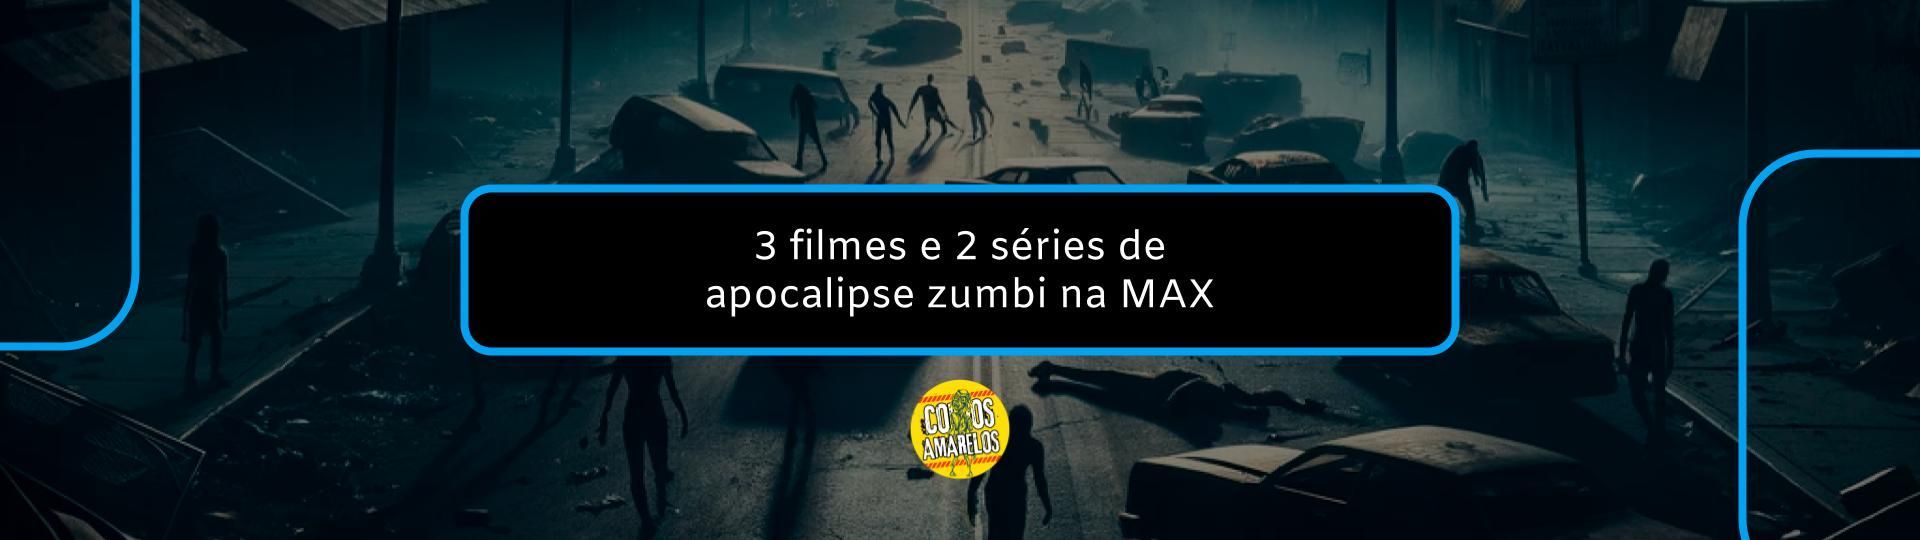 filmes-e-series-de-apocalipse-zumbi-na-max